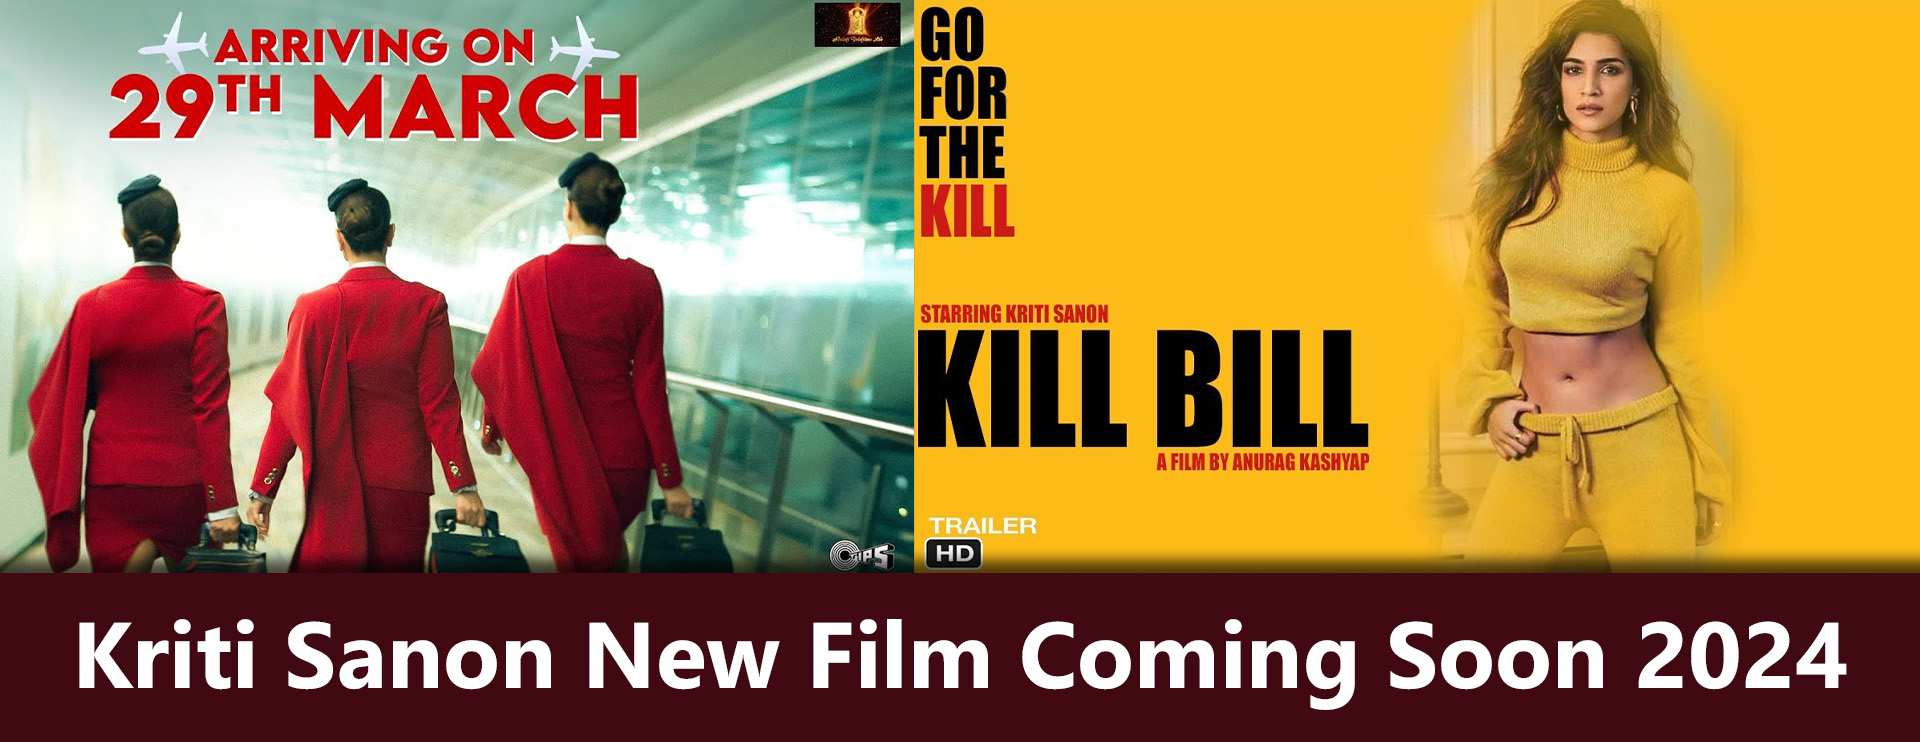 Kriti Sanon New Film Coming Soon 2024